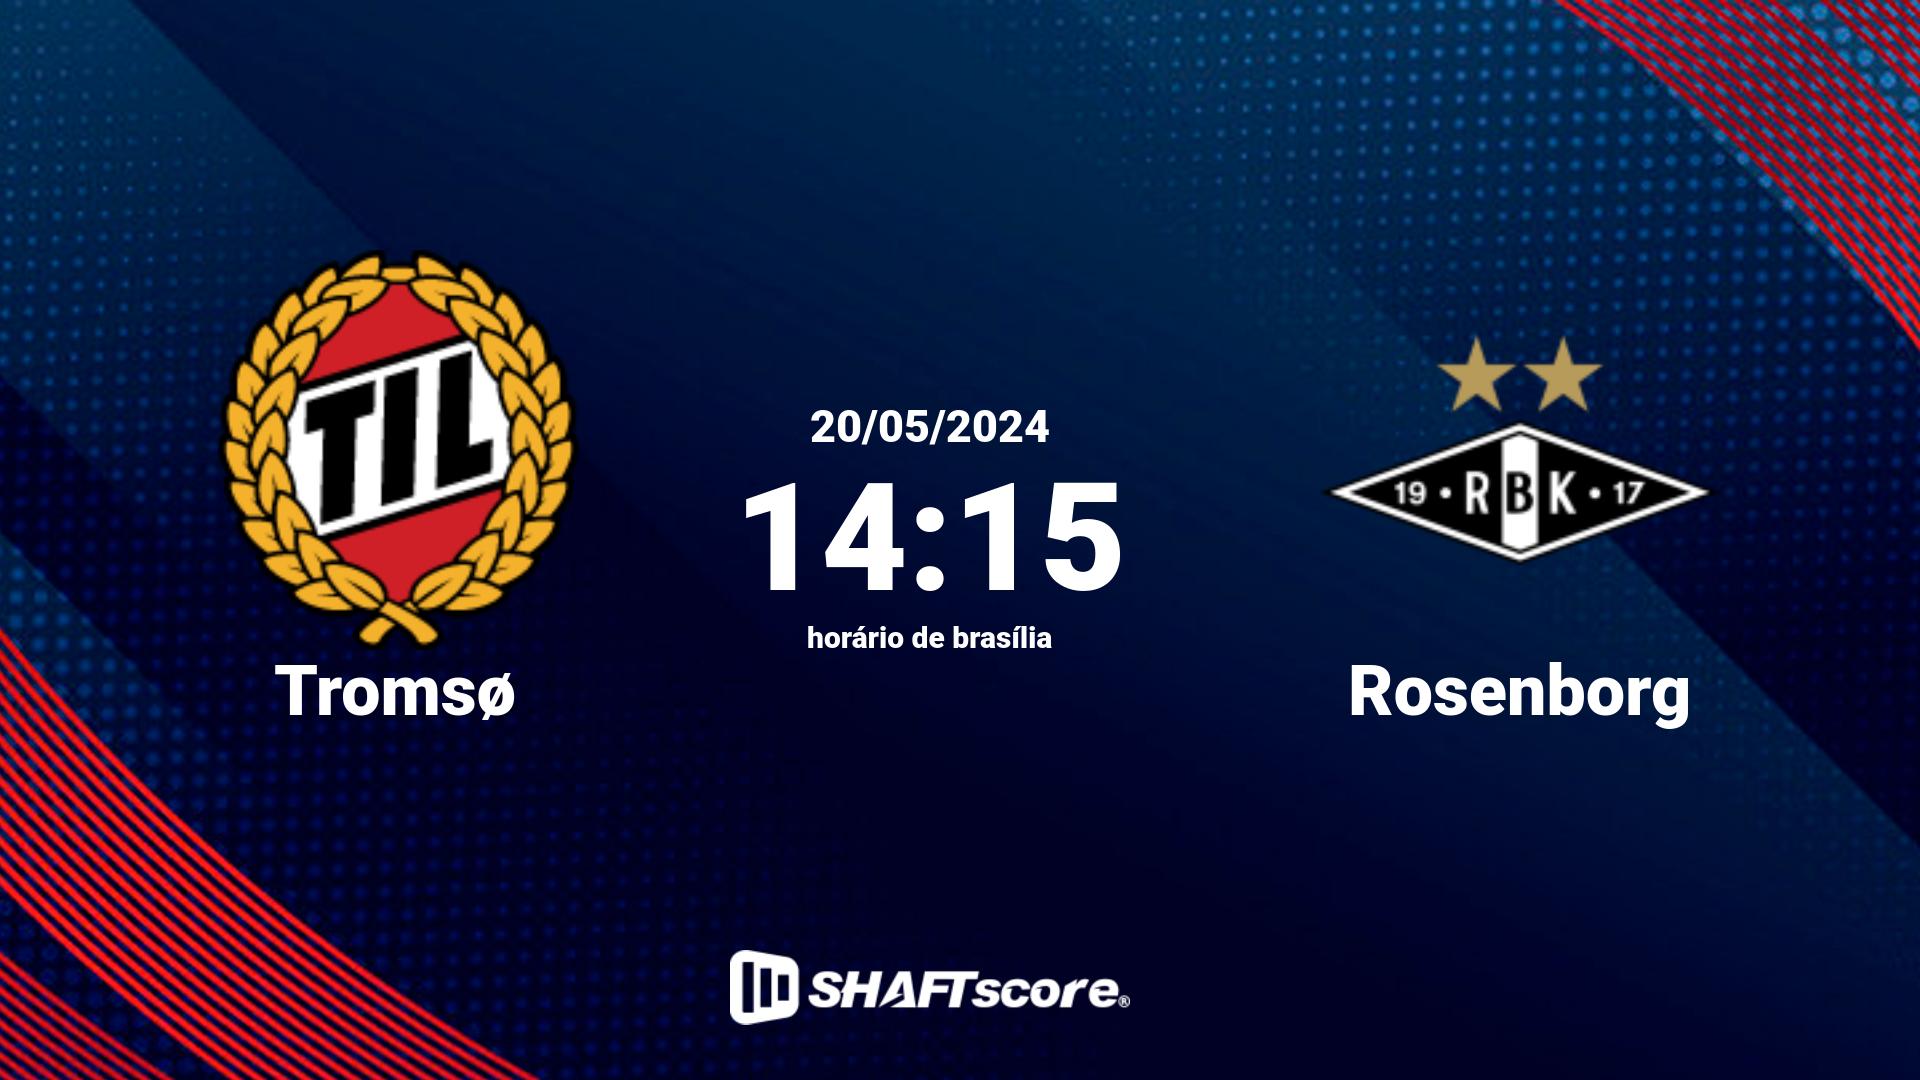 Estatísticas do jogo Tromsø vs Rosenborg 20.05 14:15